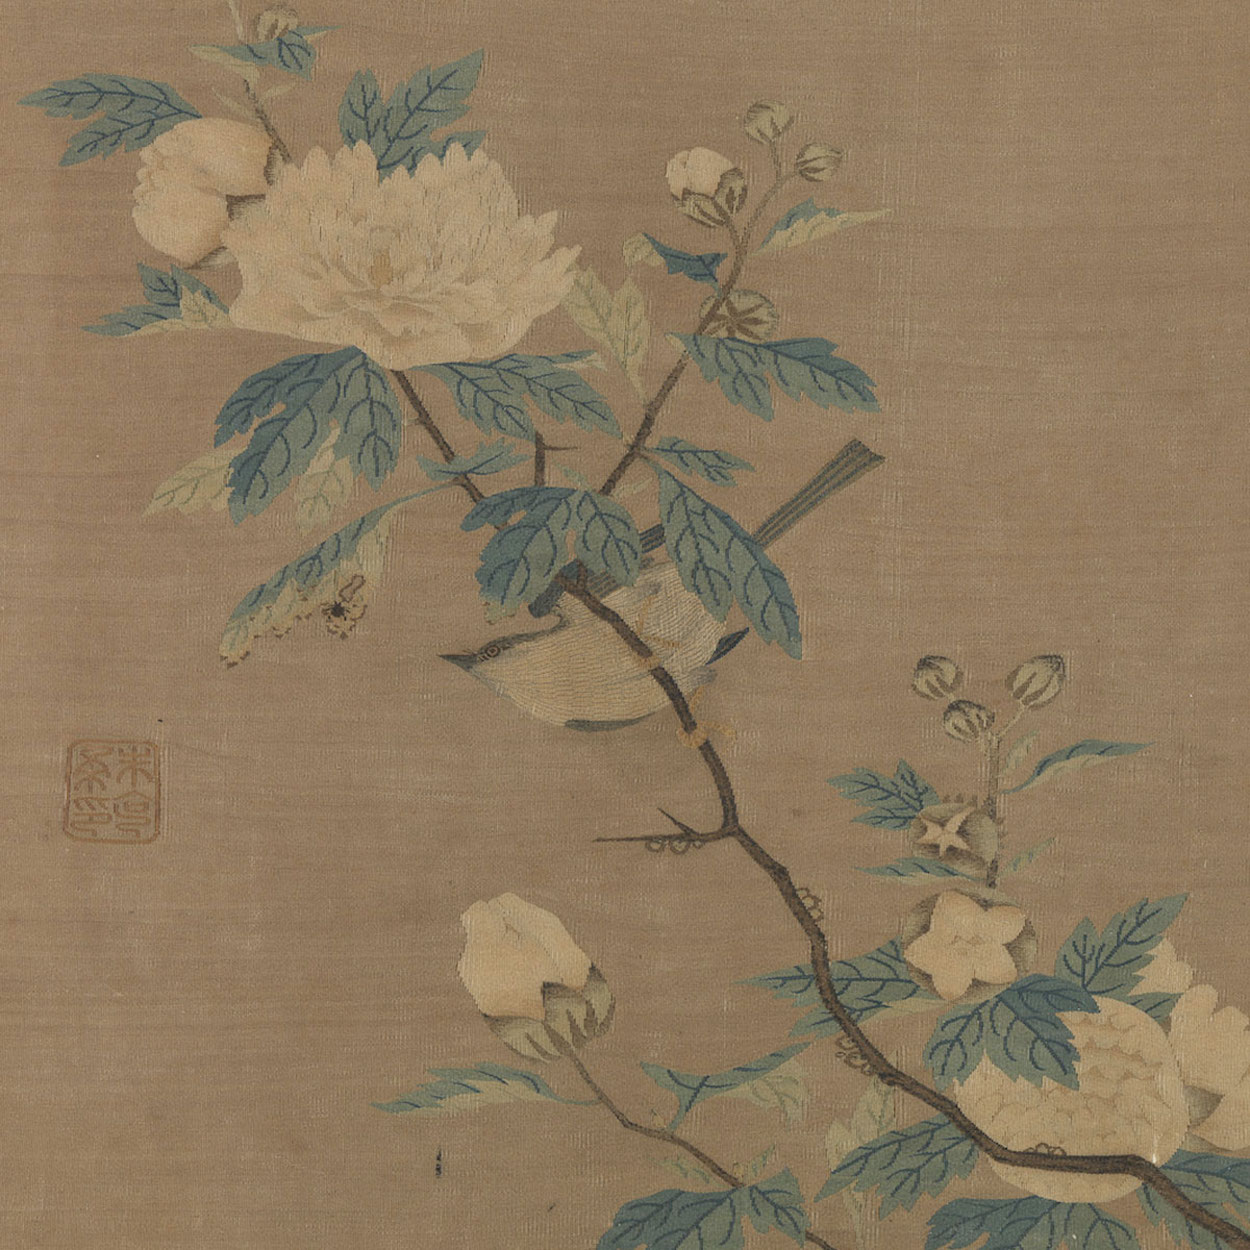 عصفور وورود by Zhu Kerou - بين 1127 و1279 م 